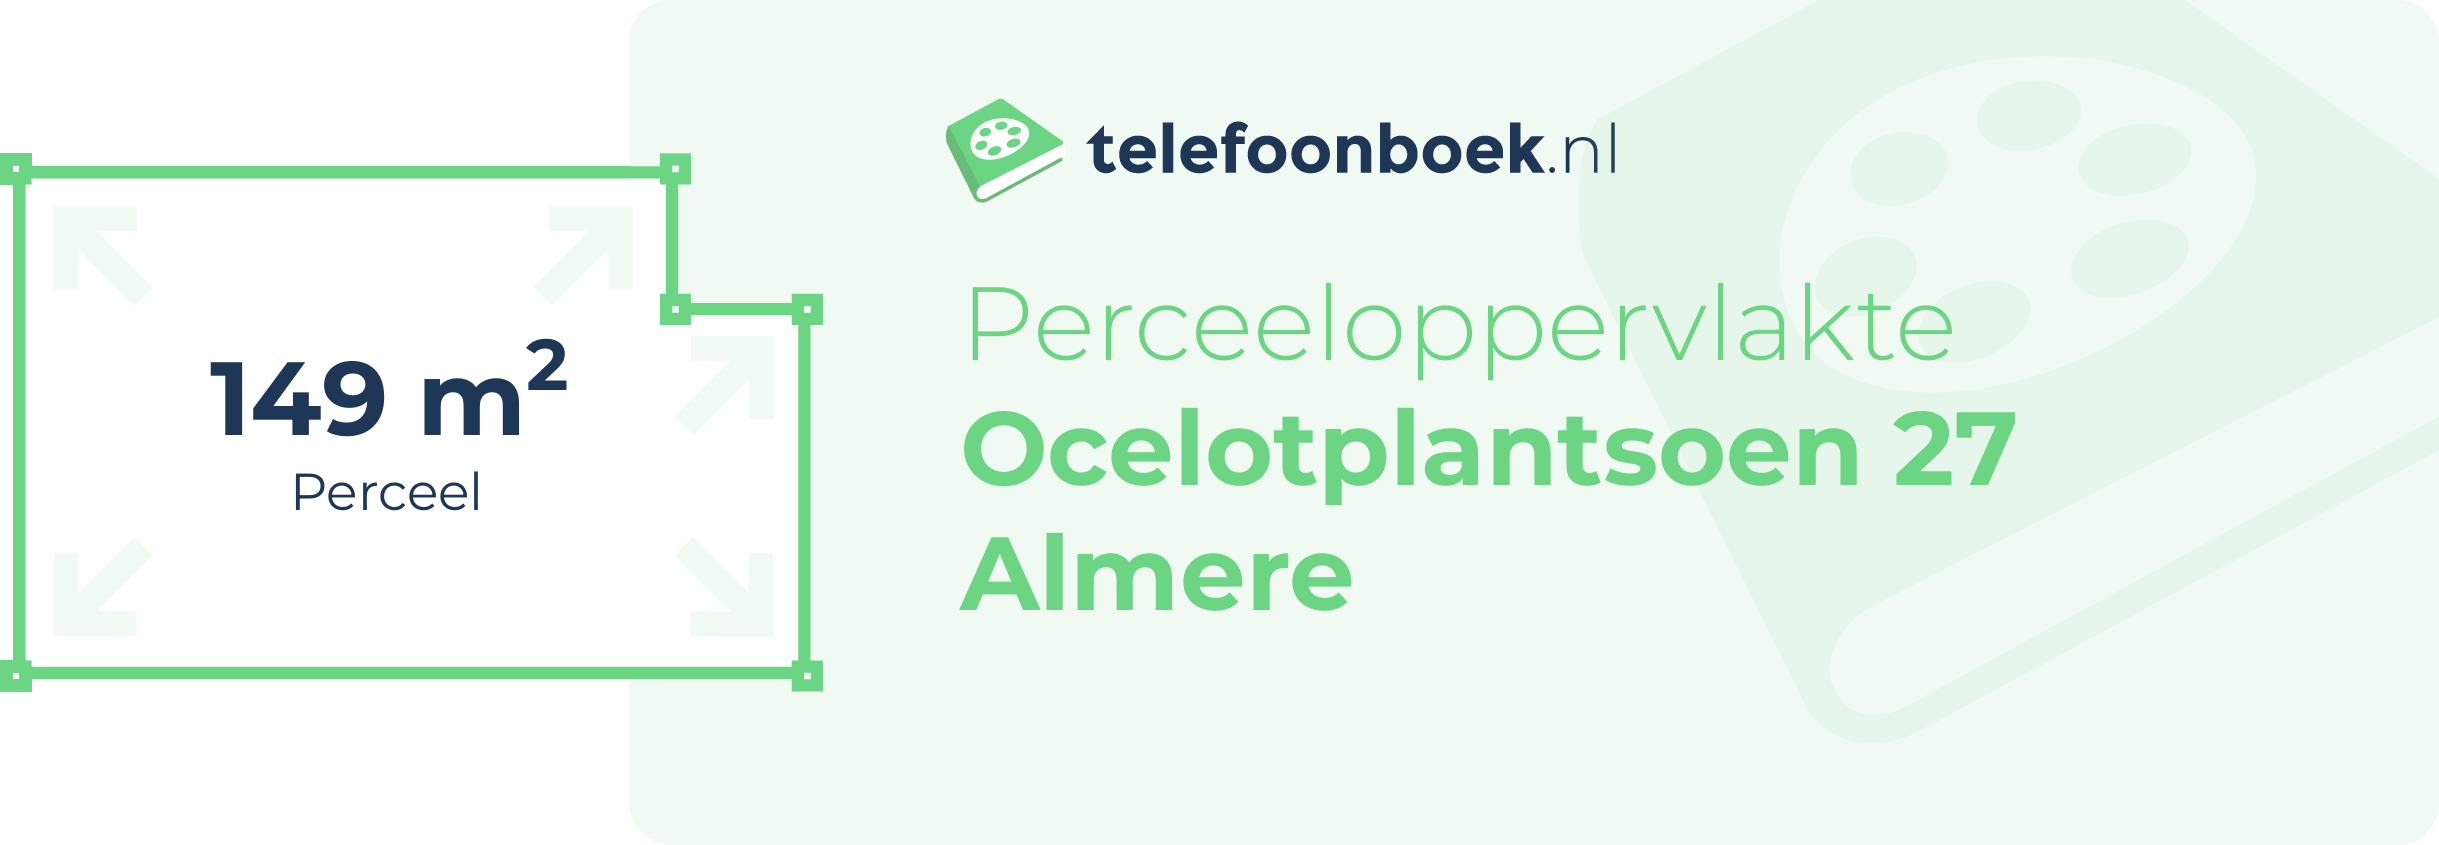 Perceeloppervlakte Ocelotplantsoen 27 Almere